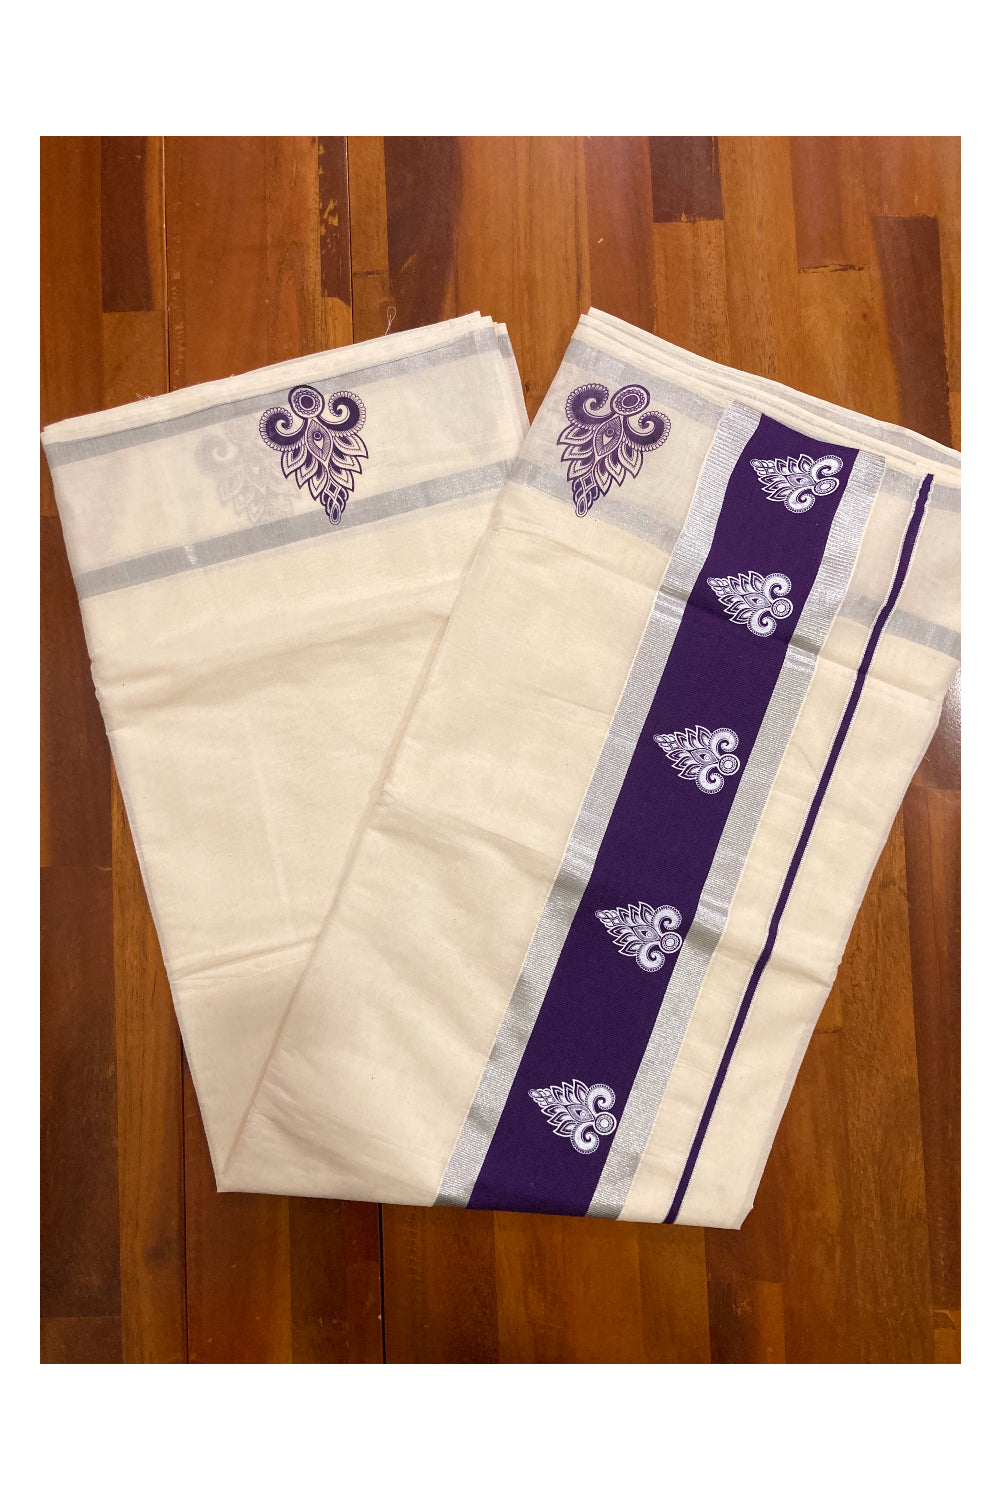 Pure Cotton Kerala Silver Kasavu Saree with White Block Prints in Dark Violet Pallu